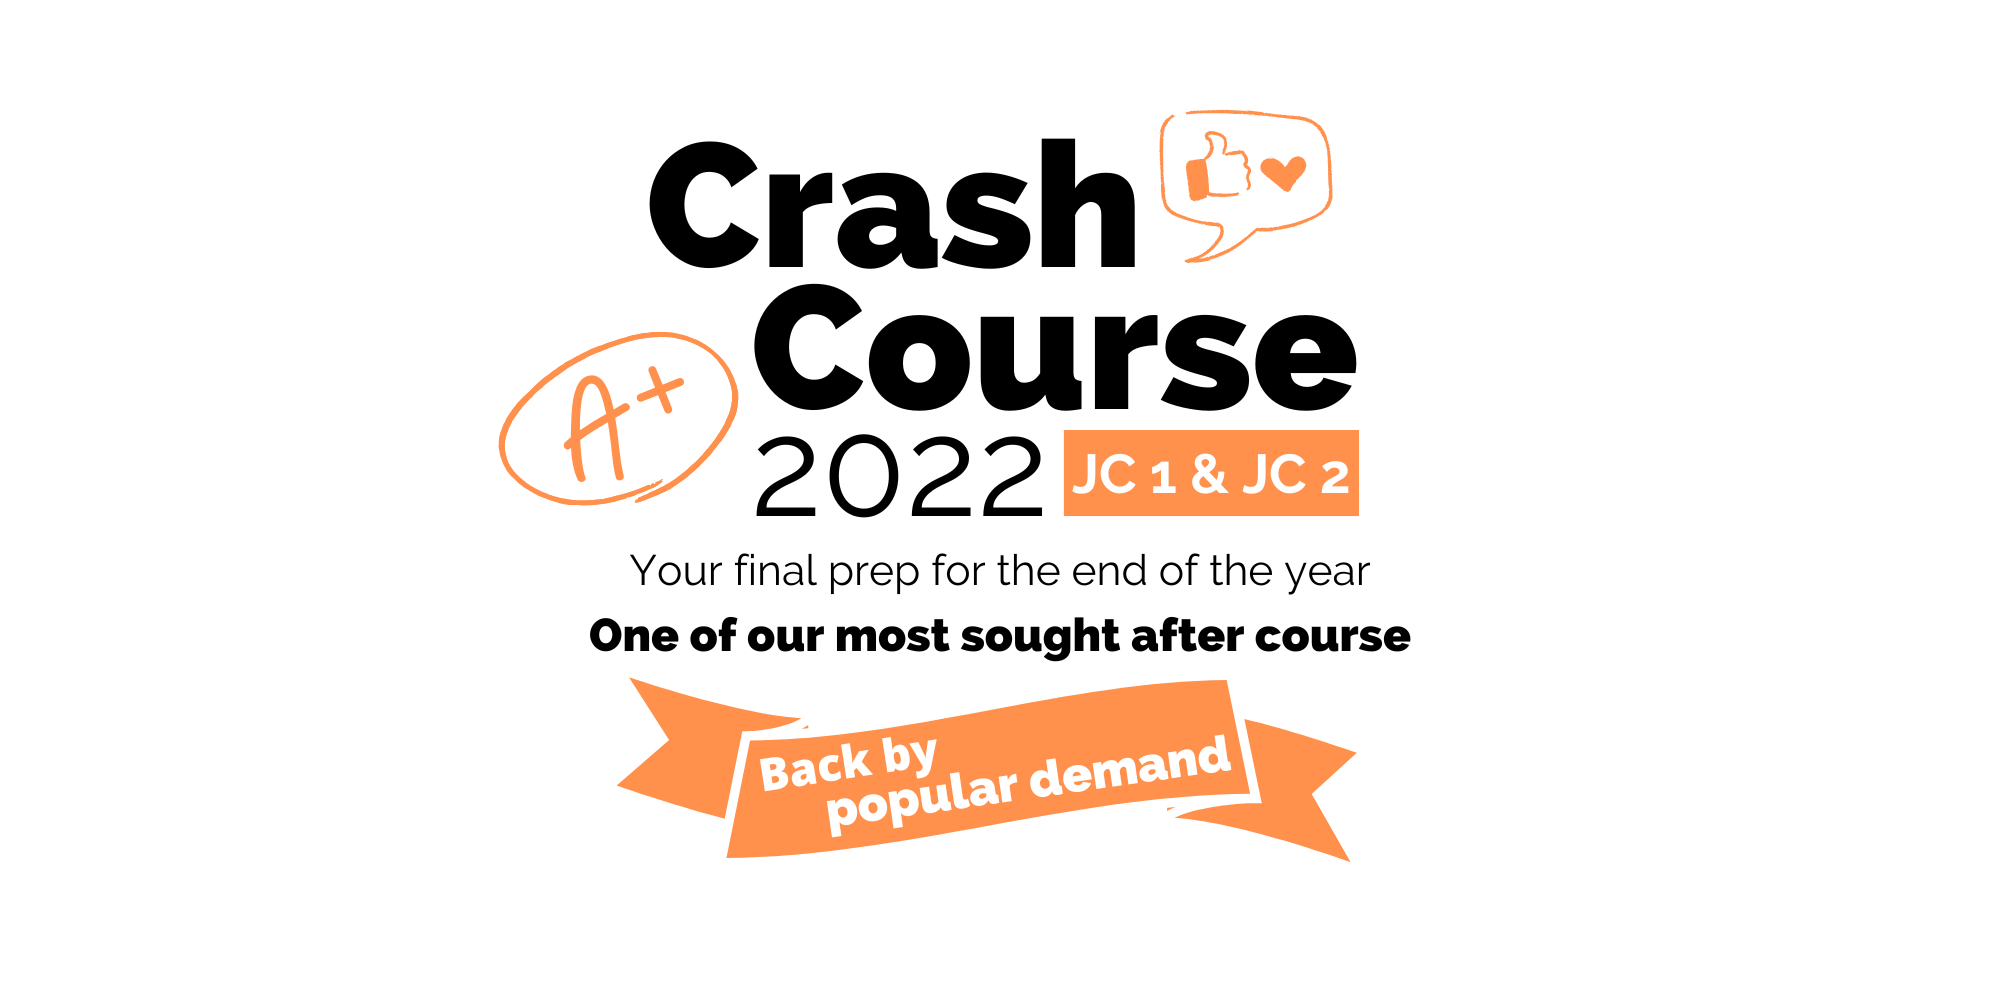 Crash course 2022